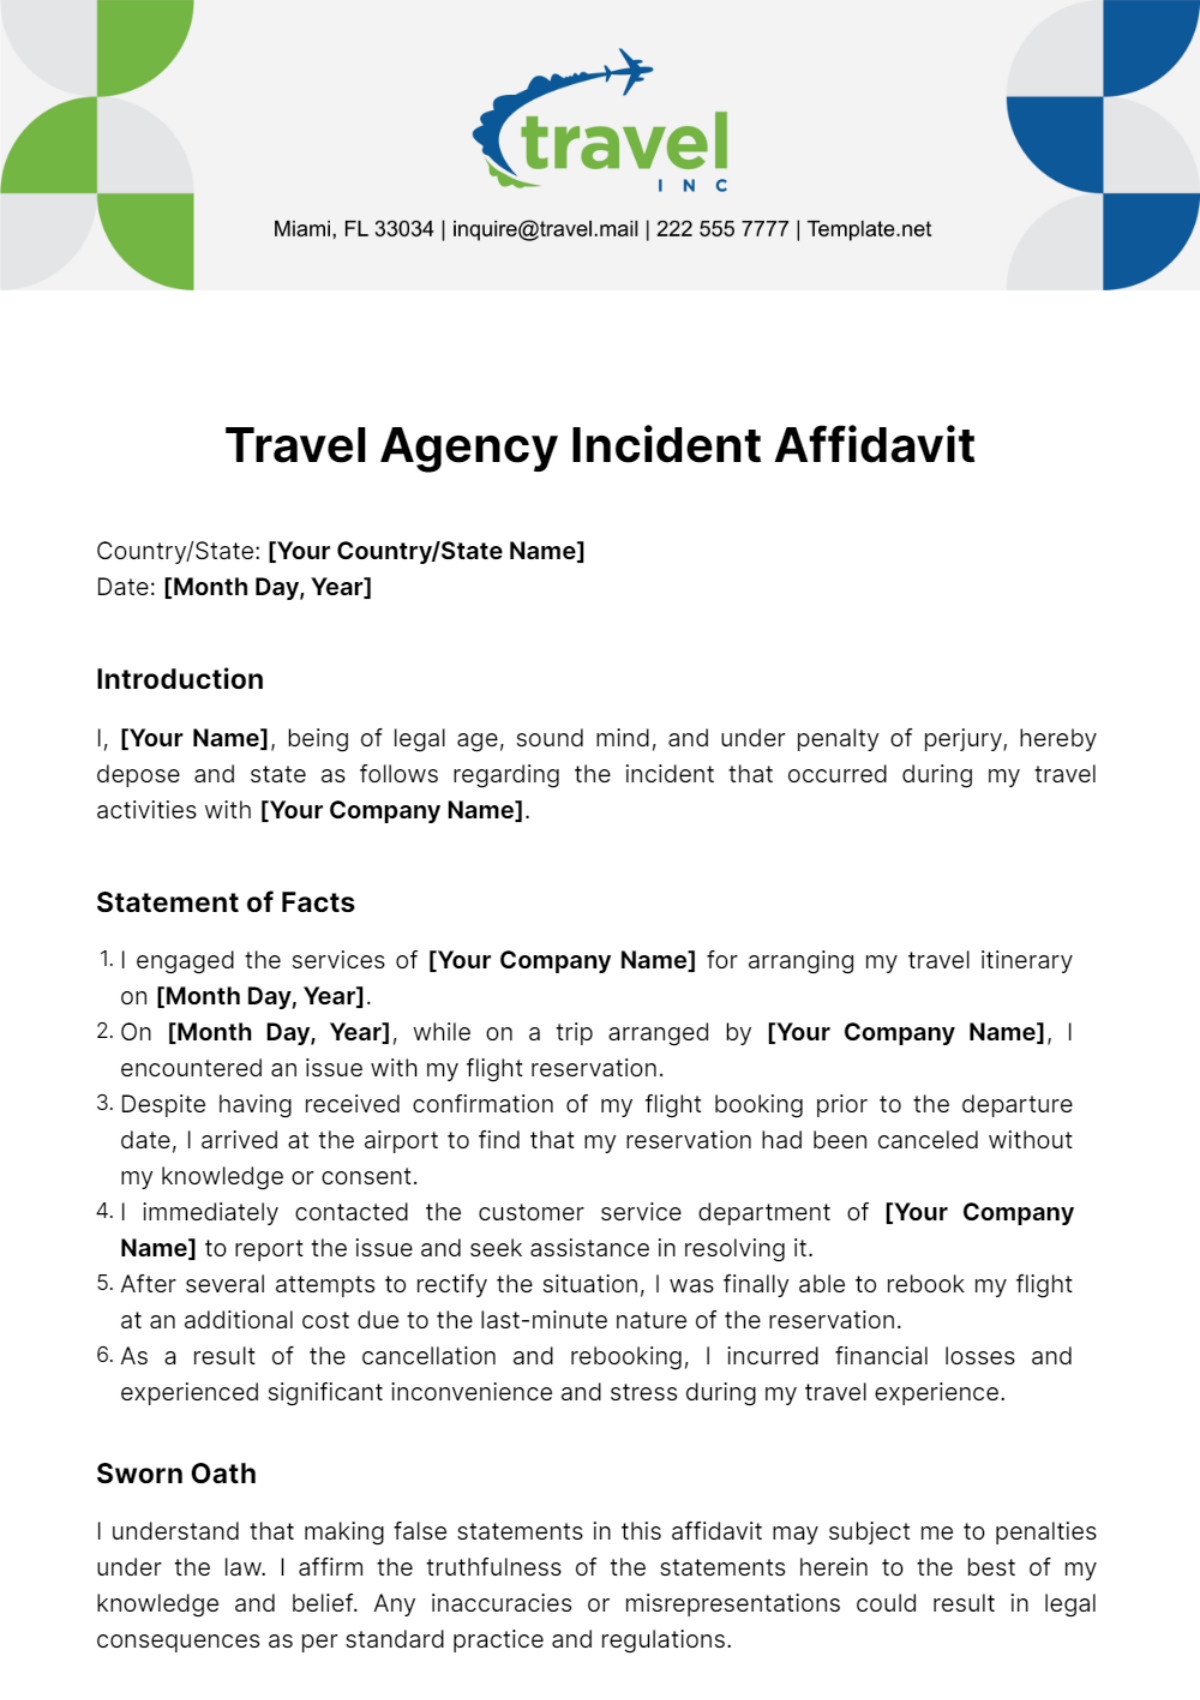 Travel Agency Incident Affidavit Template